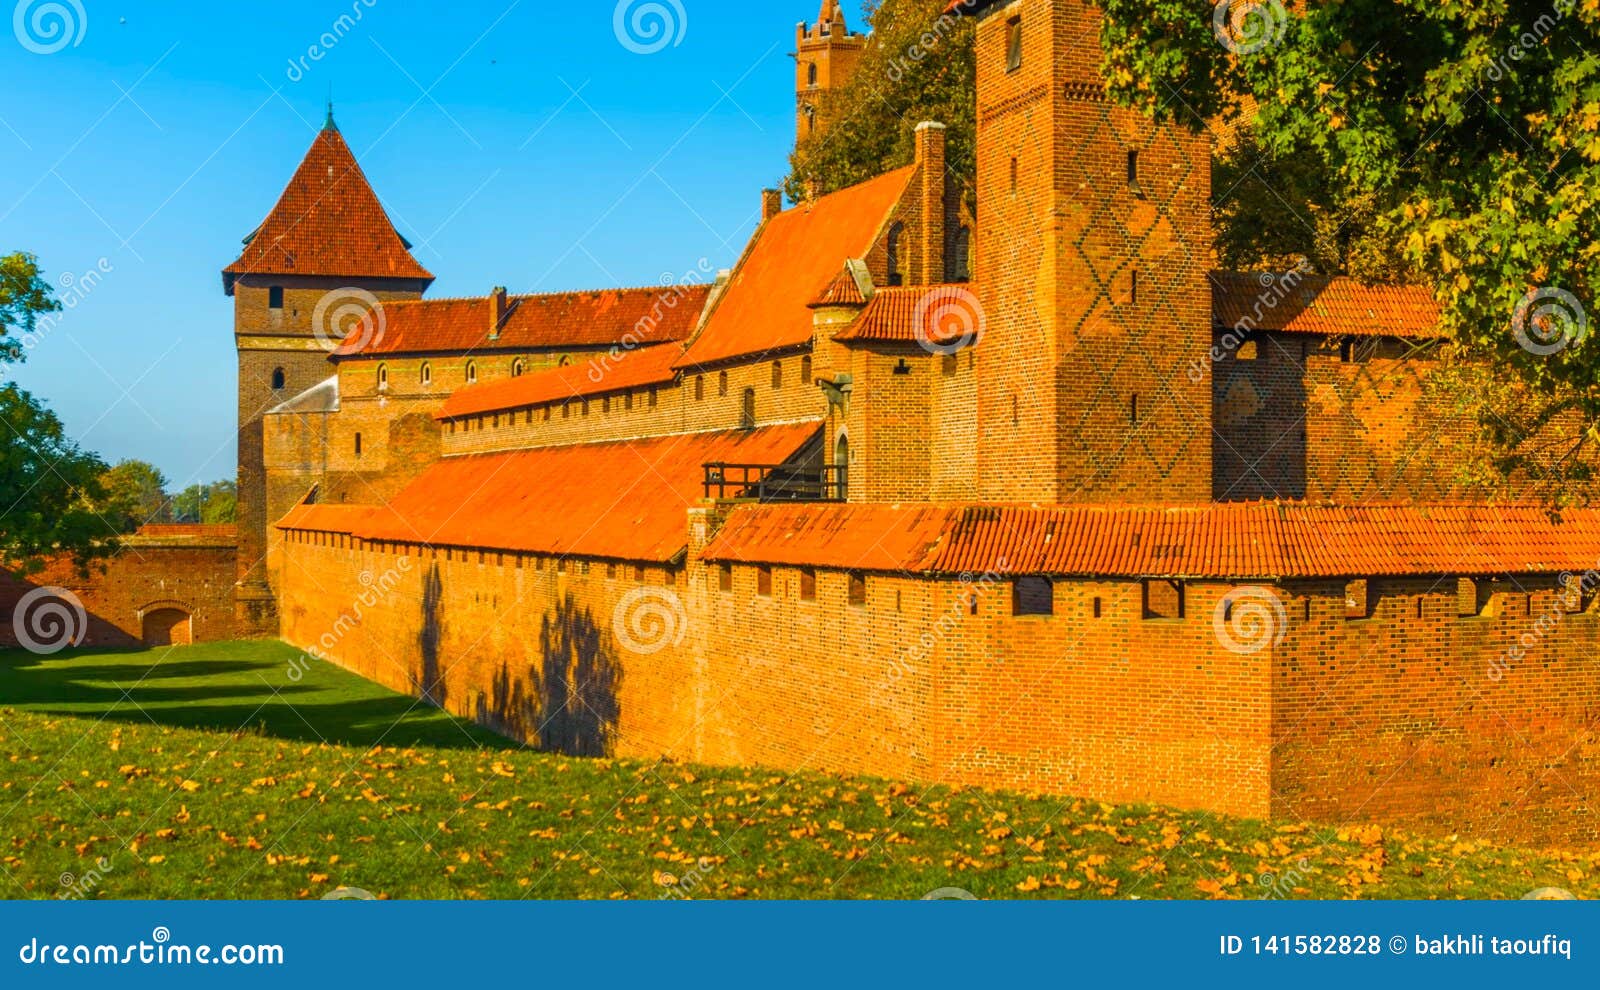 poland castle in autumn ;2019